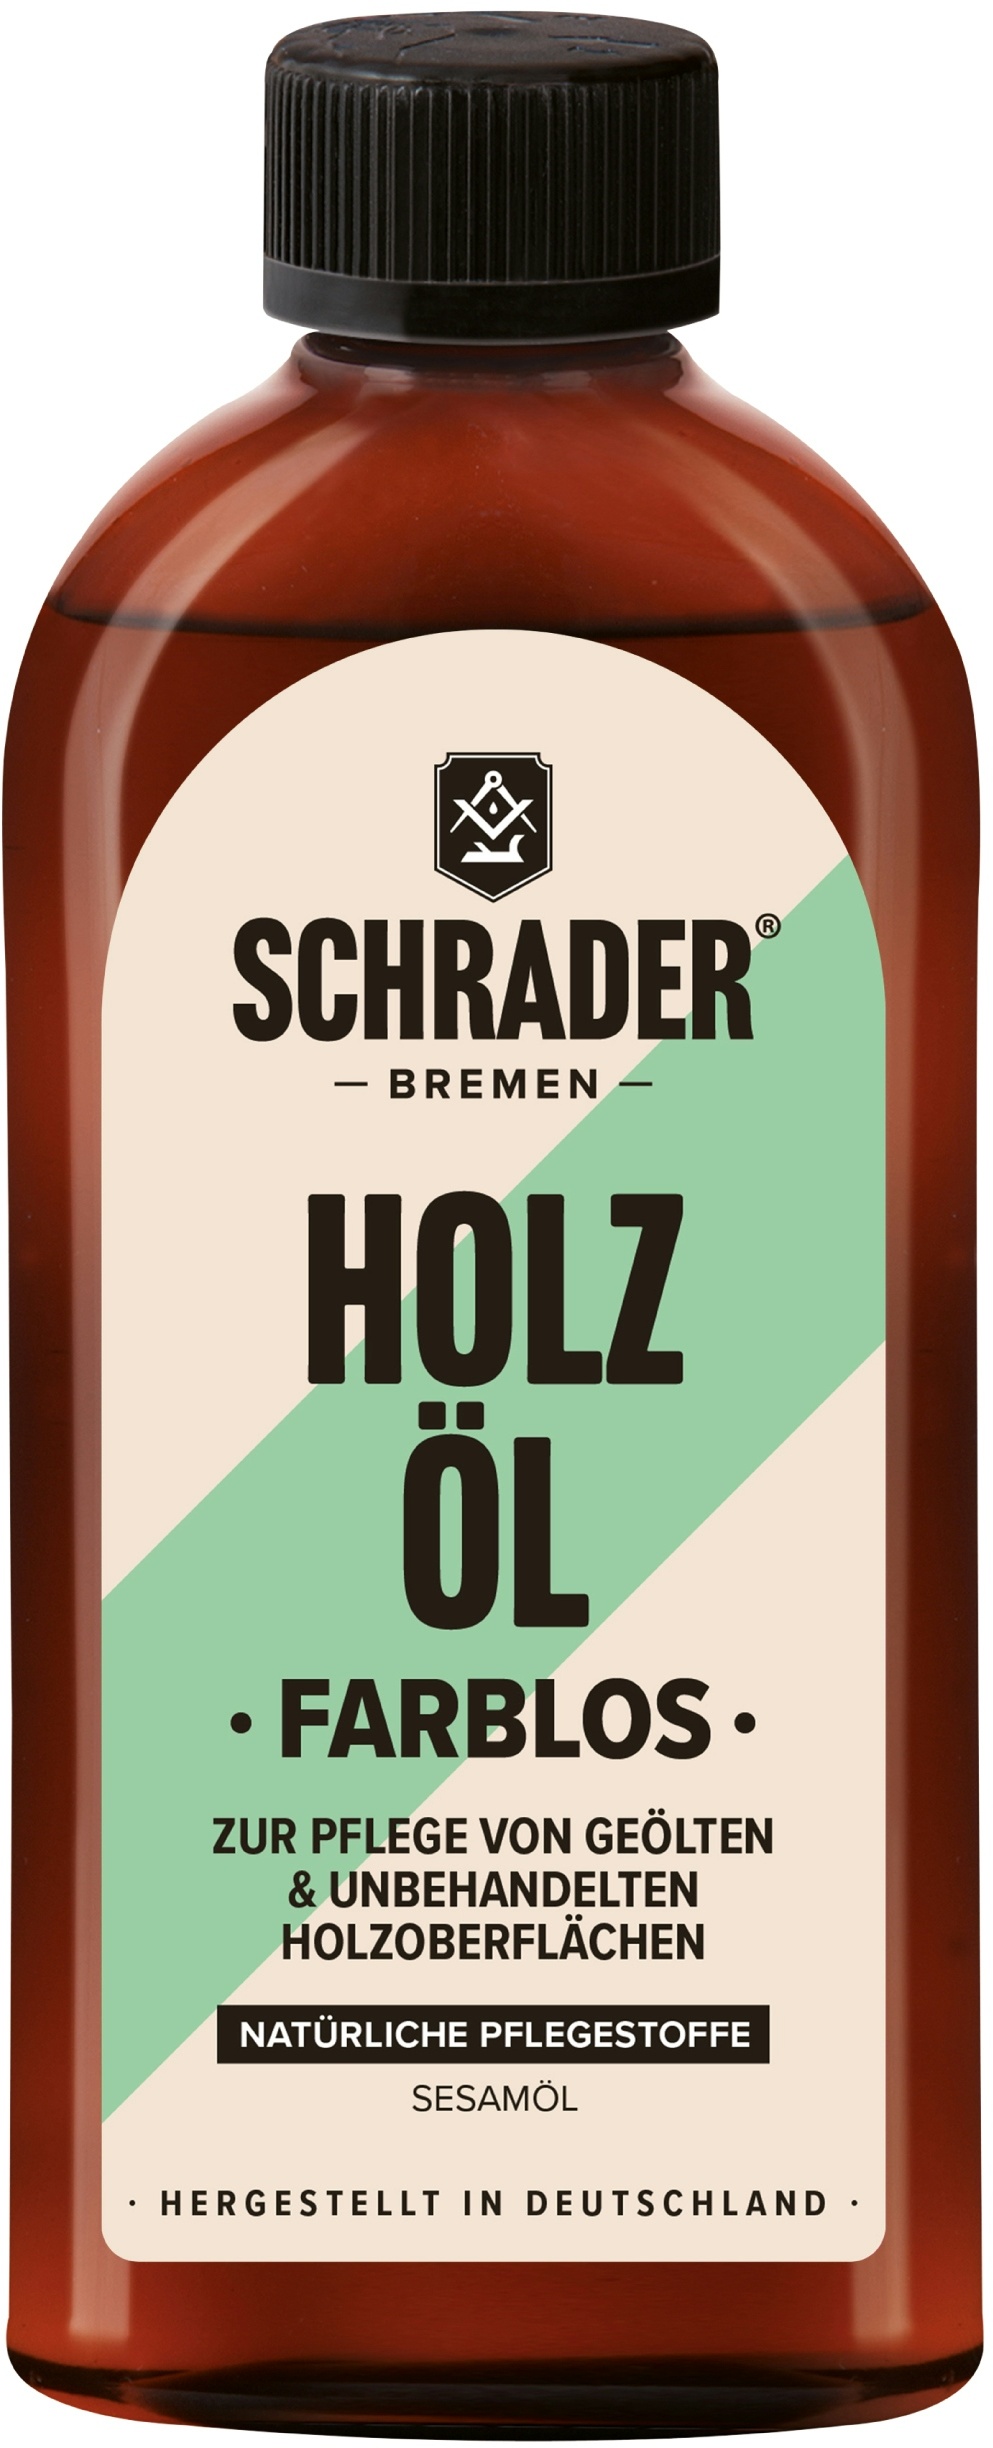 SCHRADER Holz Öl Farblos - Pflegeöl für Holzoberflächen - 250ml - Made in Germany